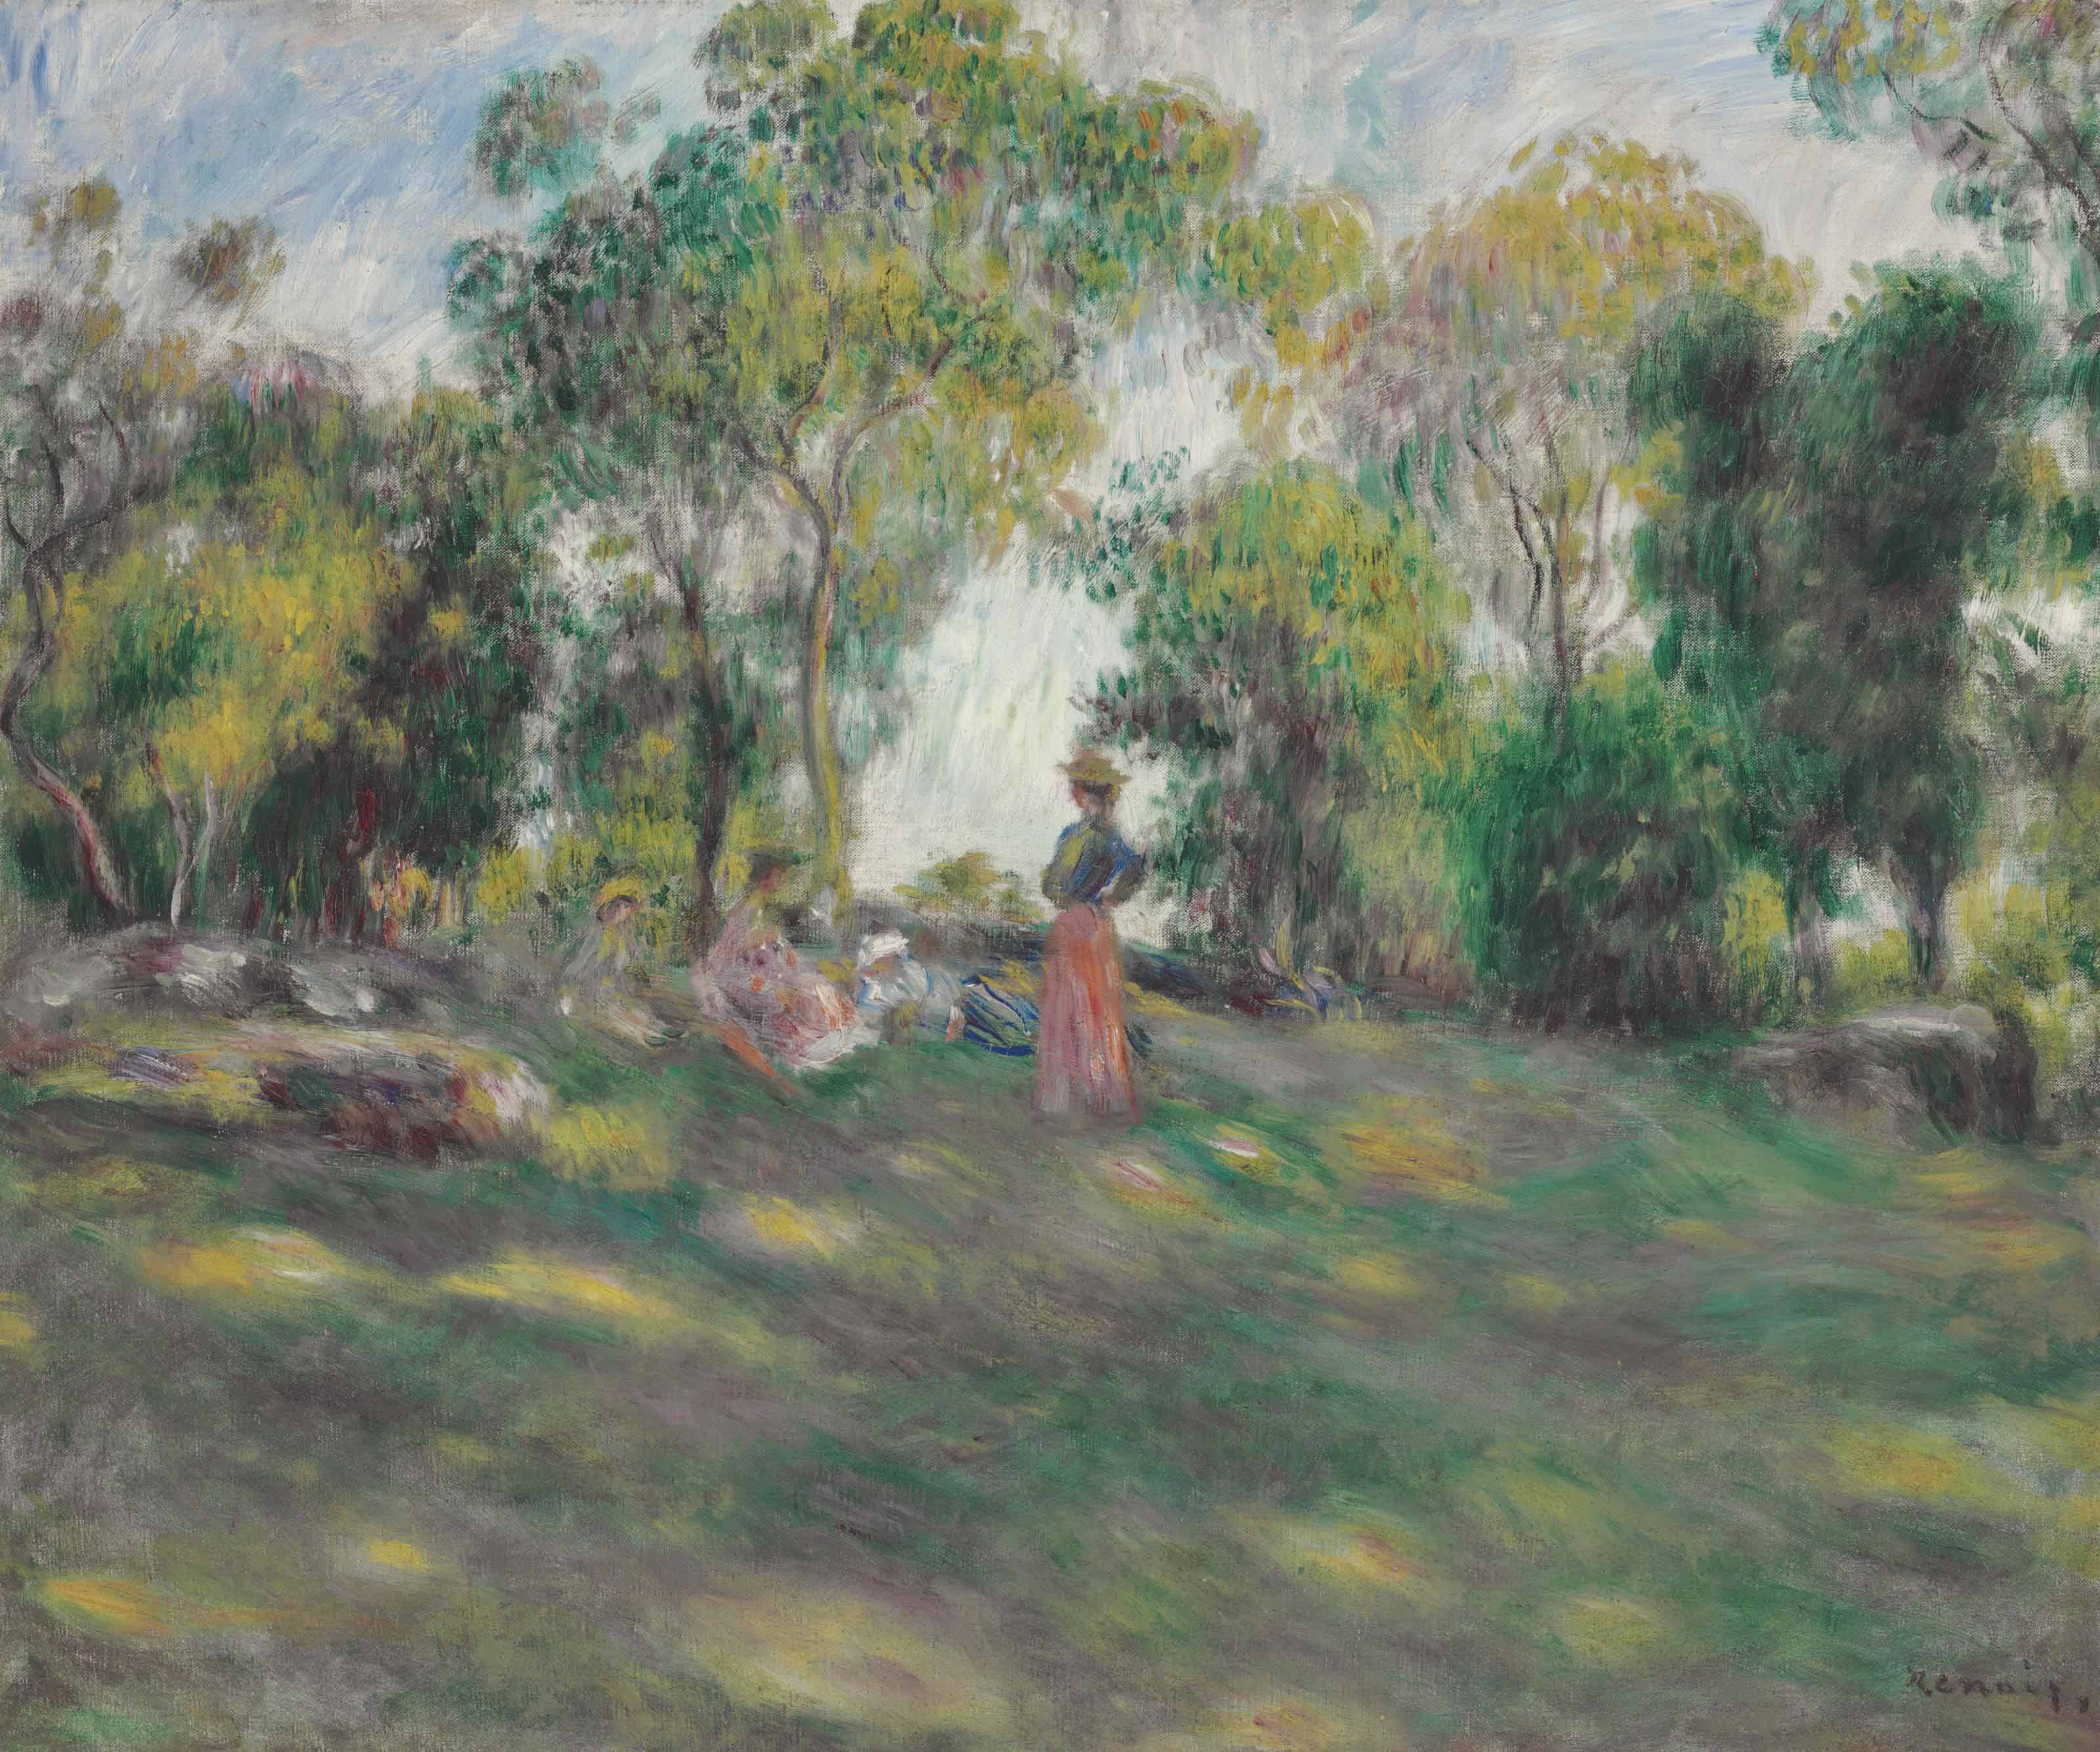 File:Renoir - Paysage avec figures, circa 1890.jpg - Wikimedia Commons